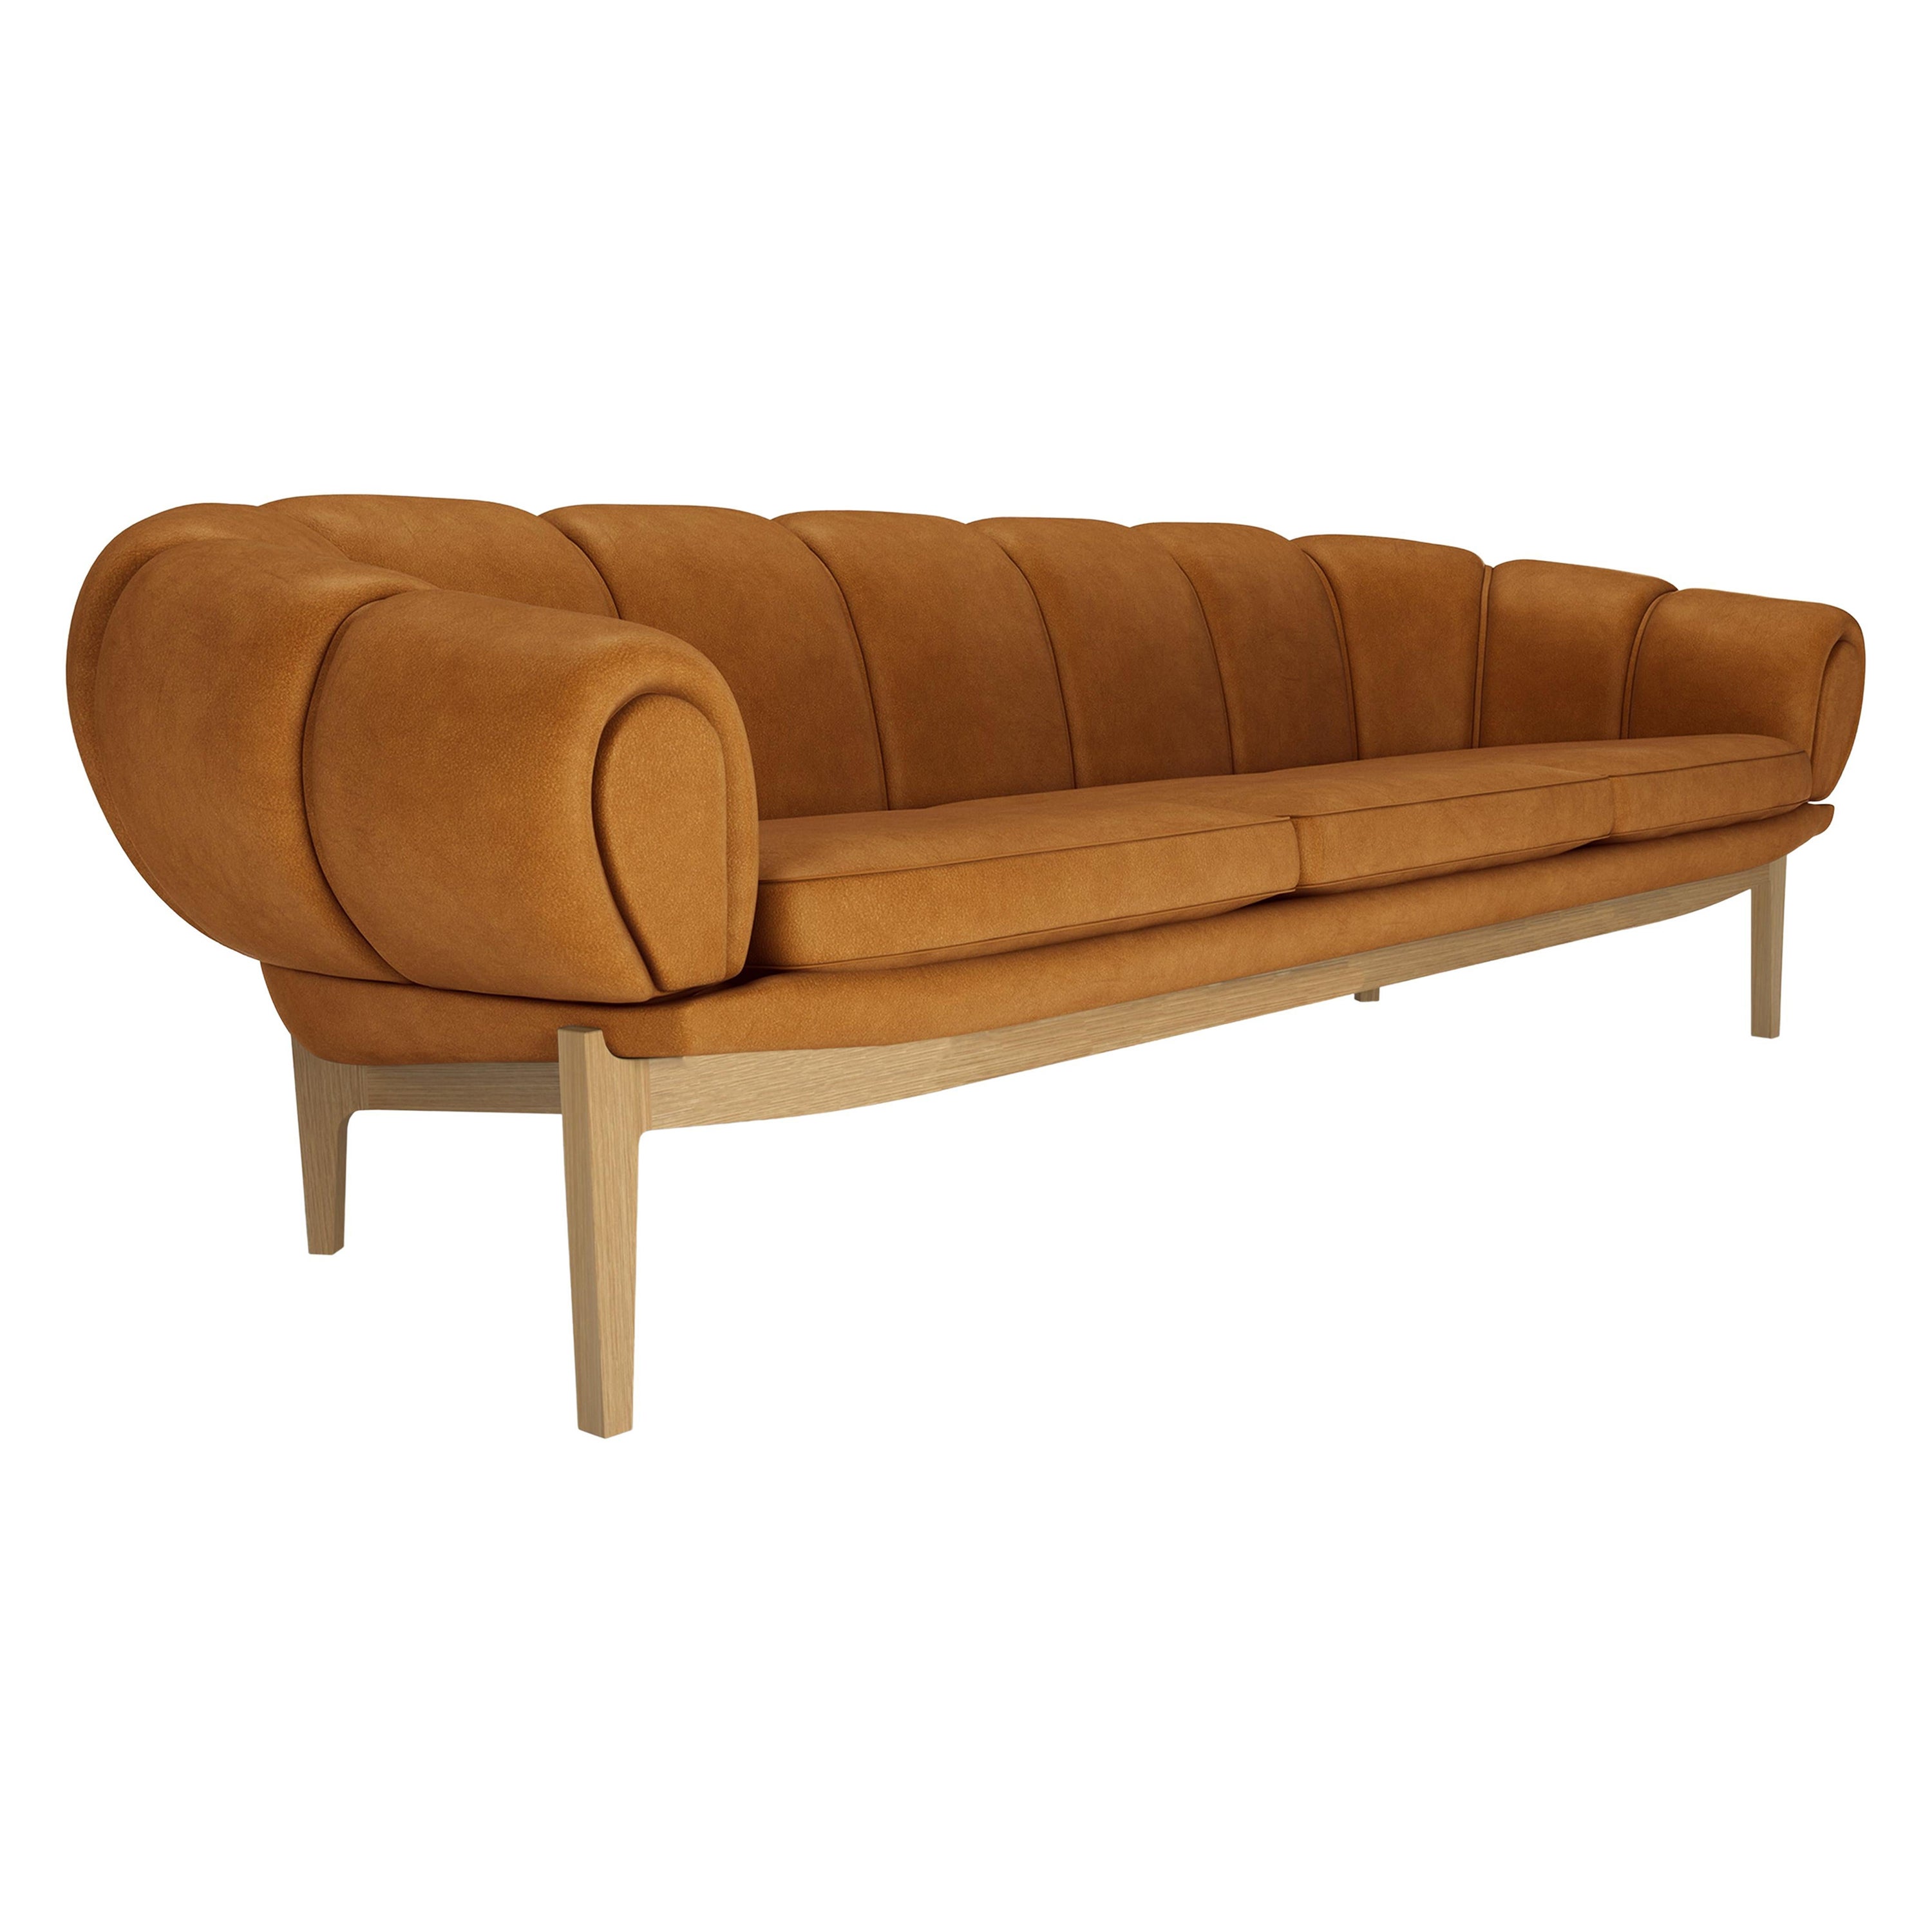 Leather 'Croissant' Sofa by Illum Wikkelsø for Gubi with Oak Legs